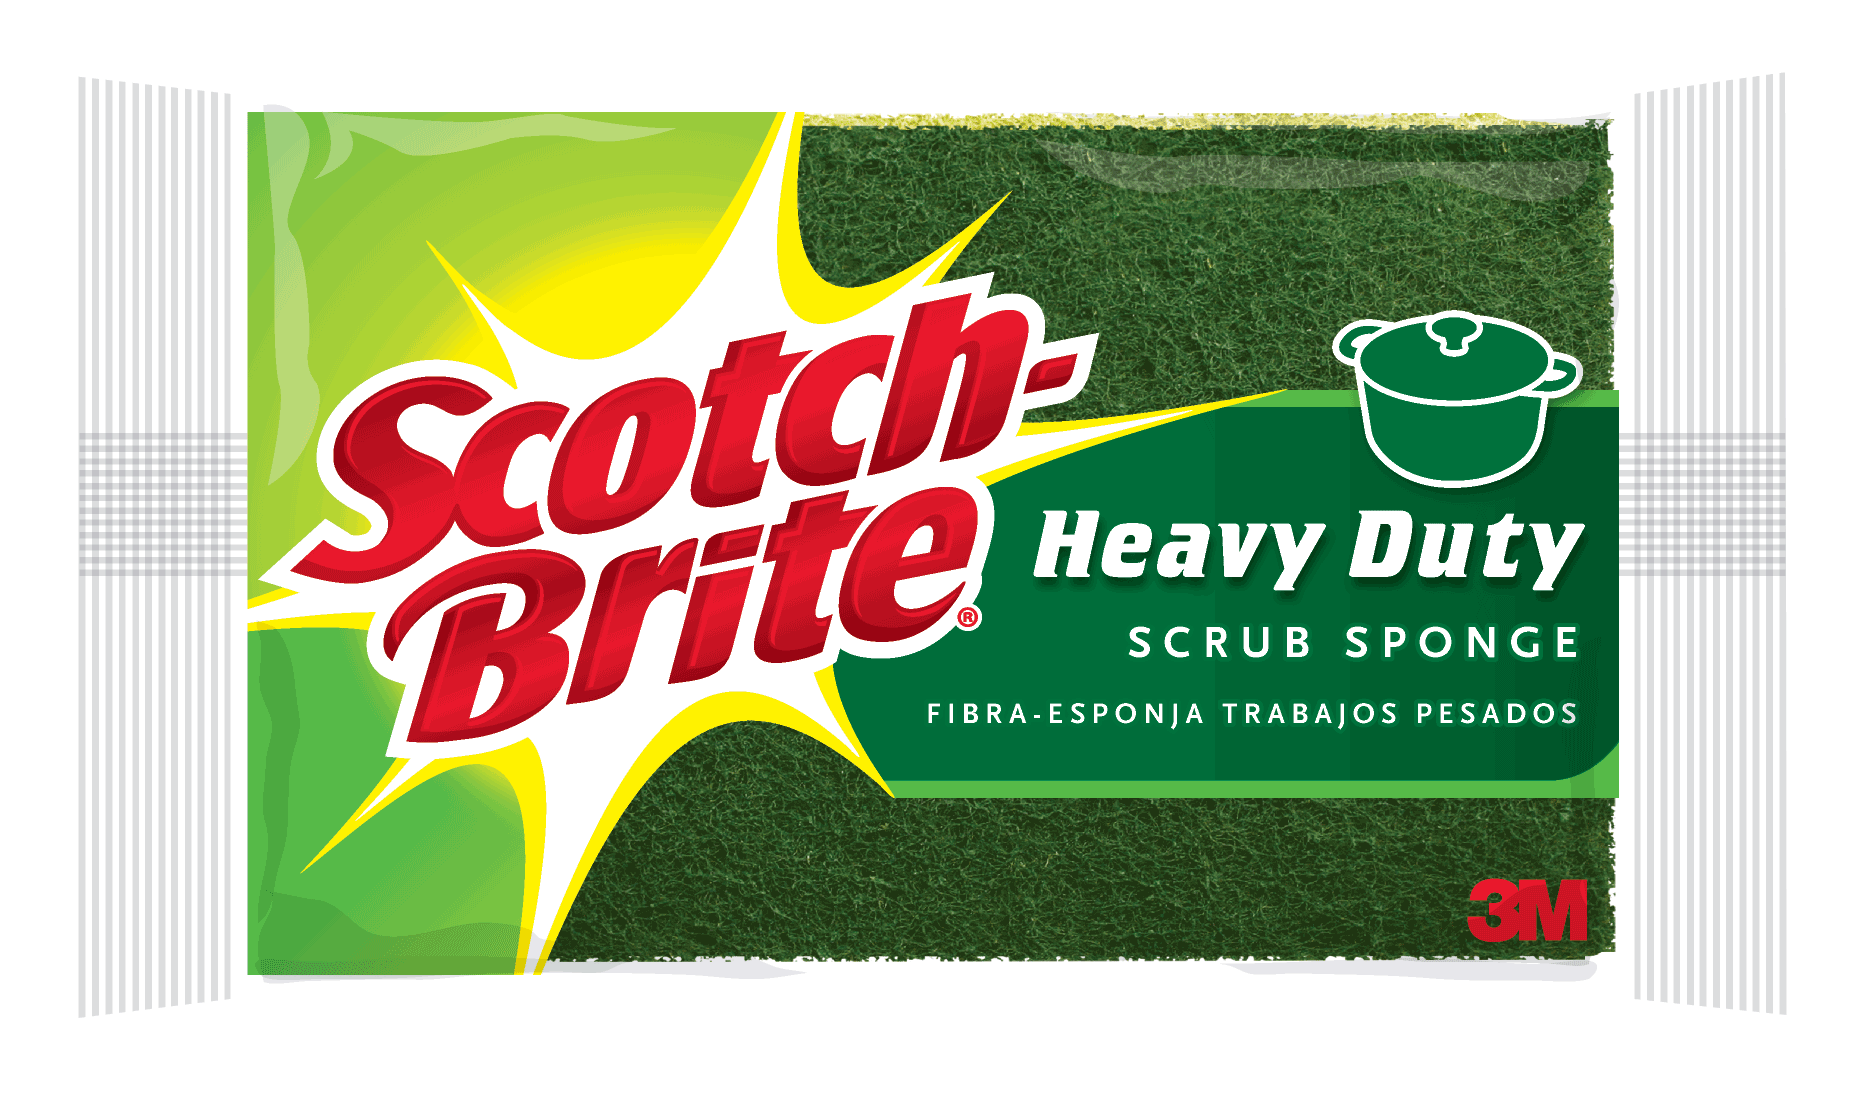 Scotch-Brite Scrub Sponges 3 ea, Shop